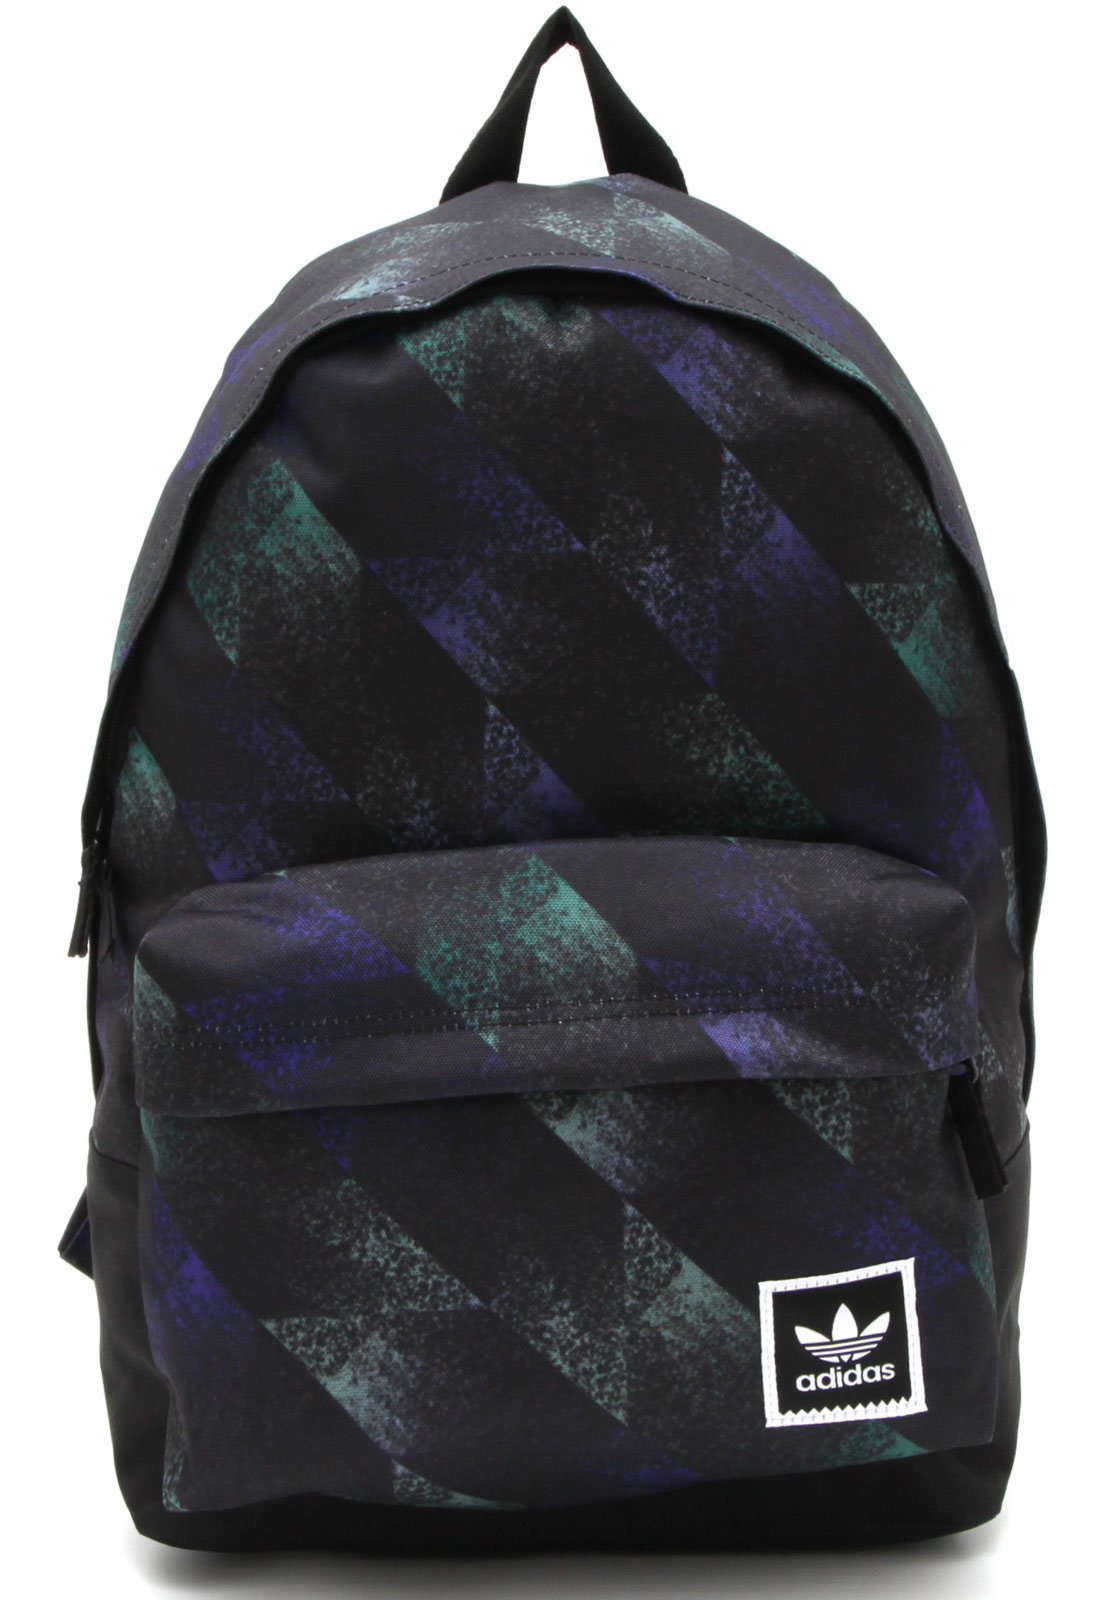 adidas towning backpack